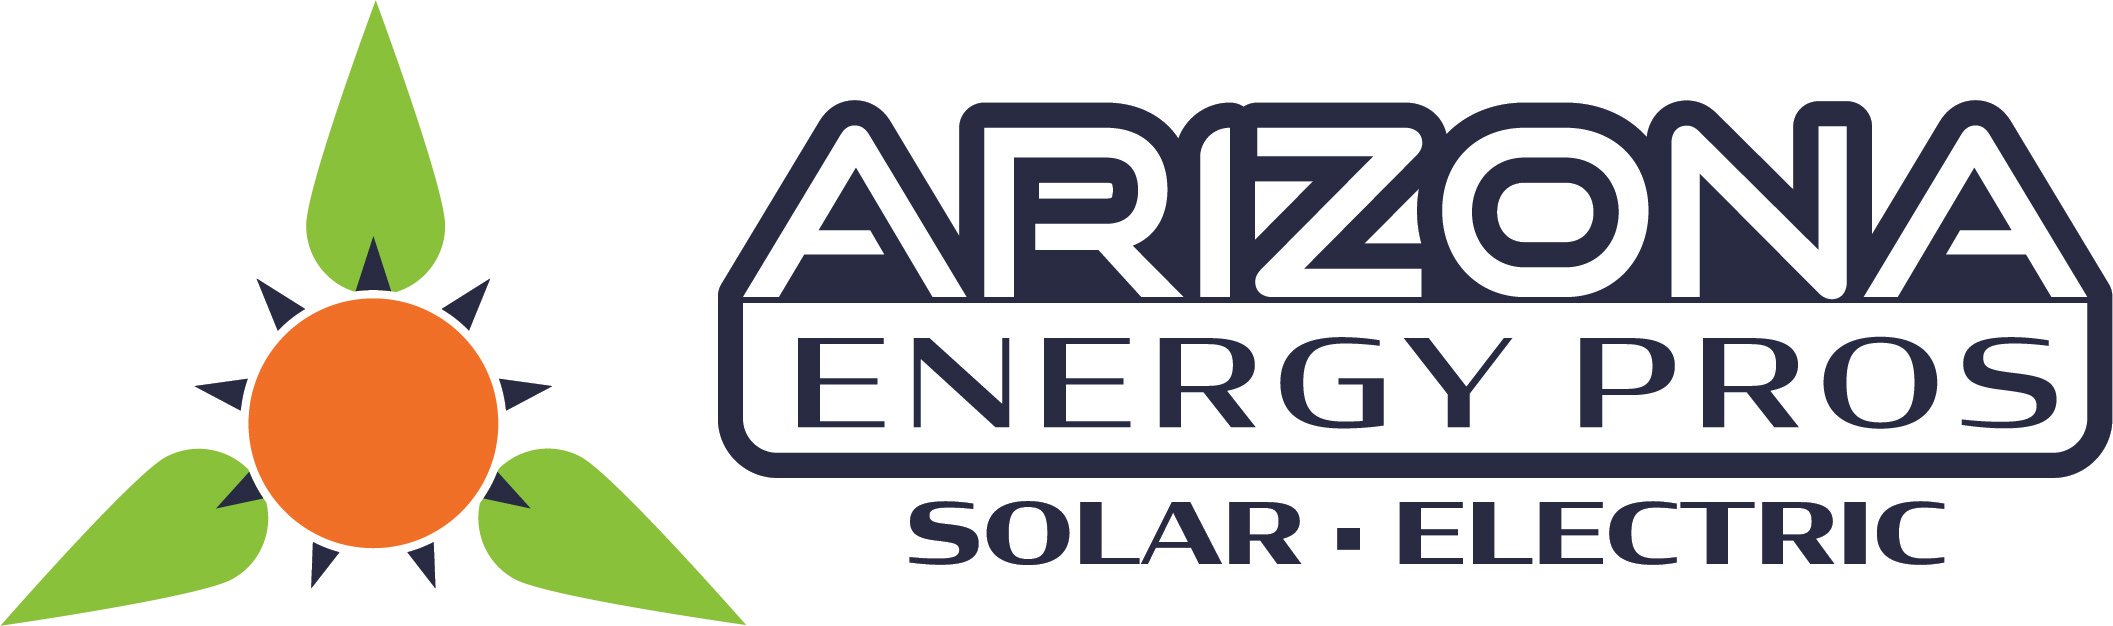 Arizona Energy Pros, Inc. Logo